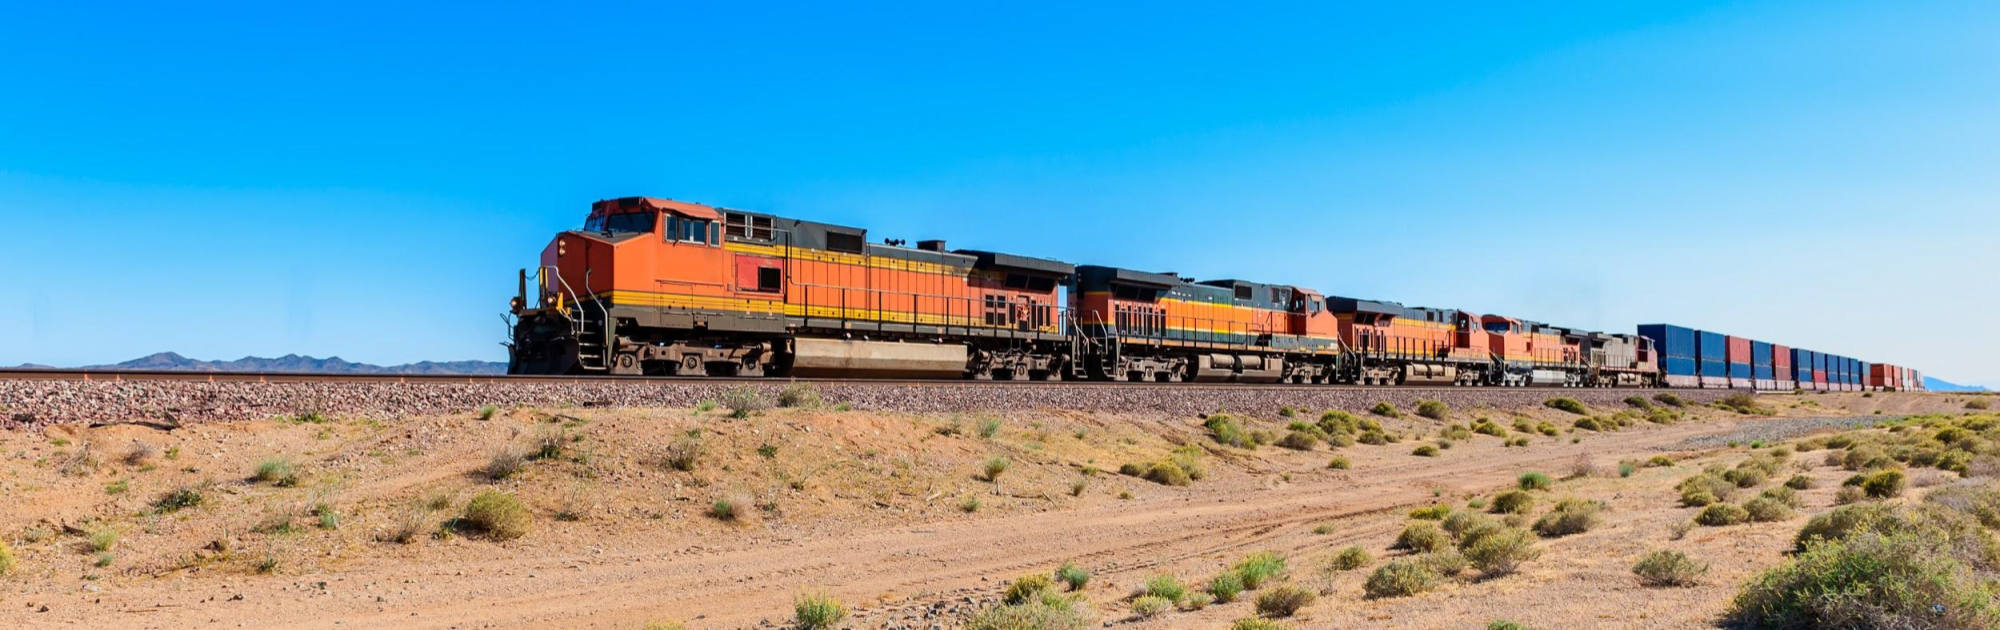 image of cargo train